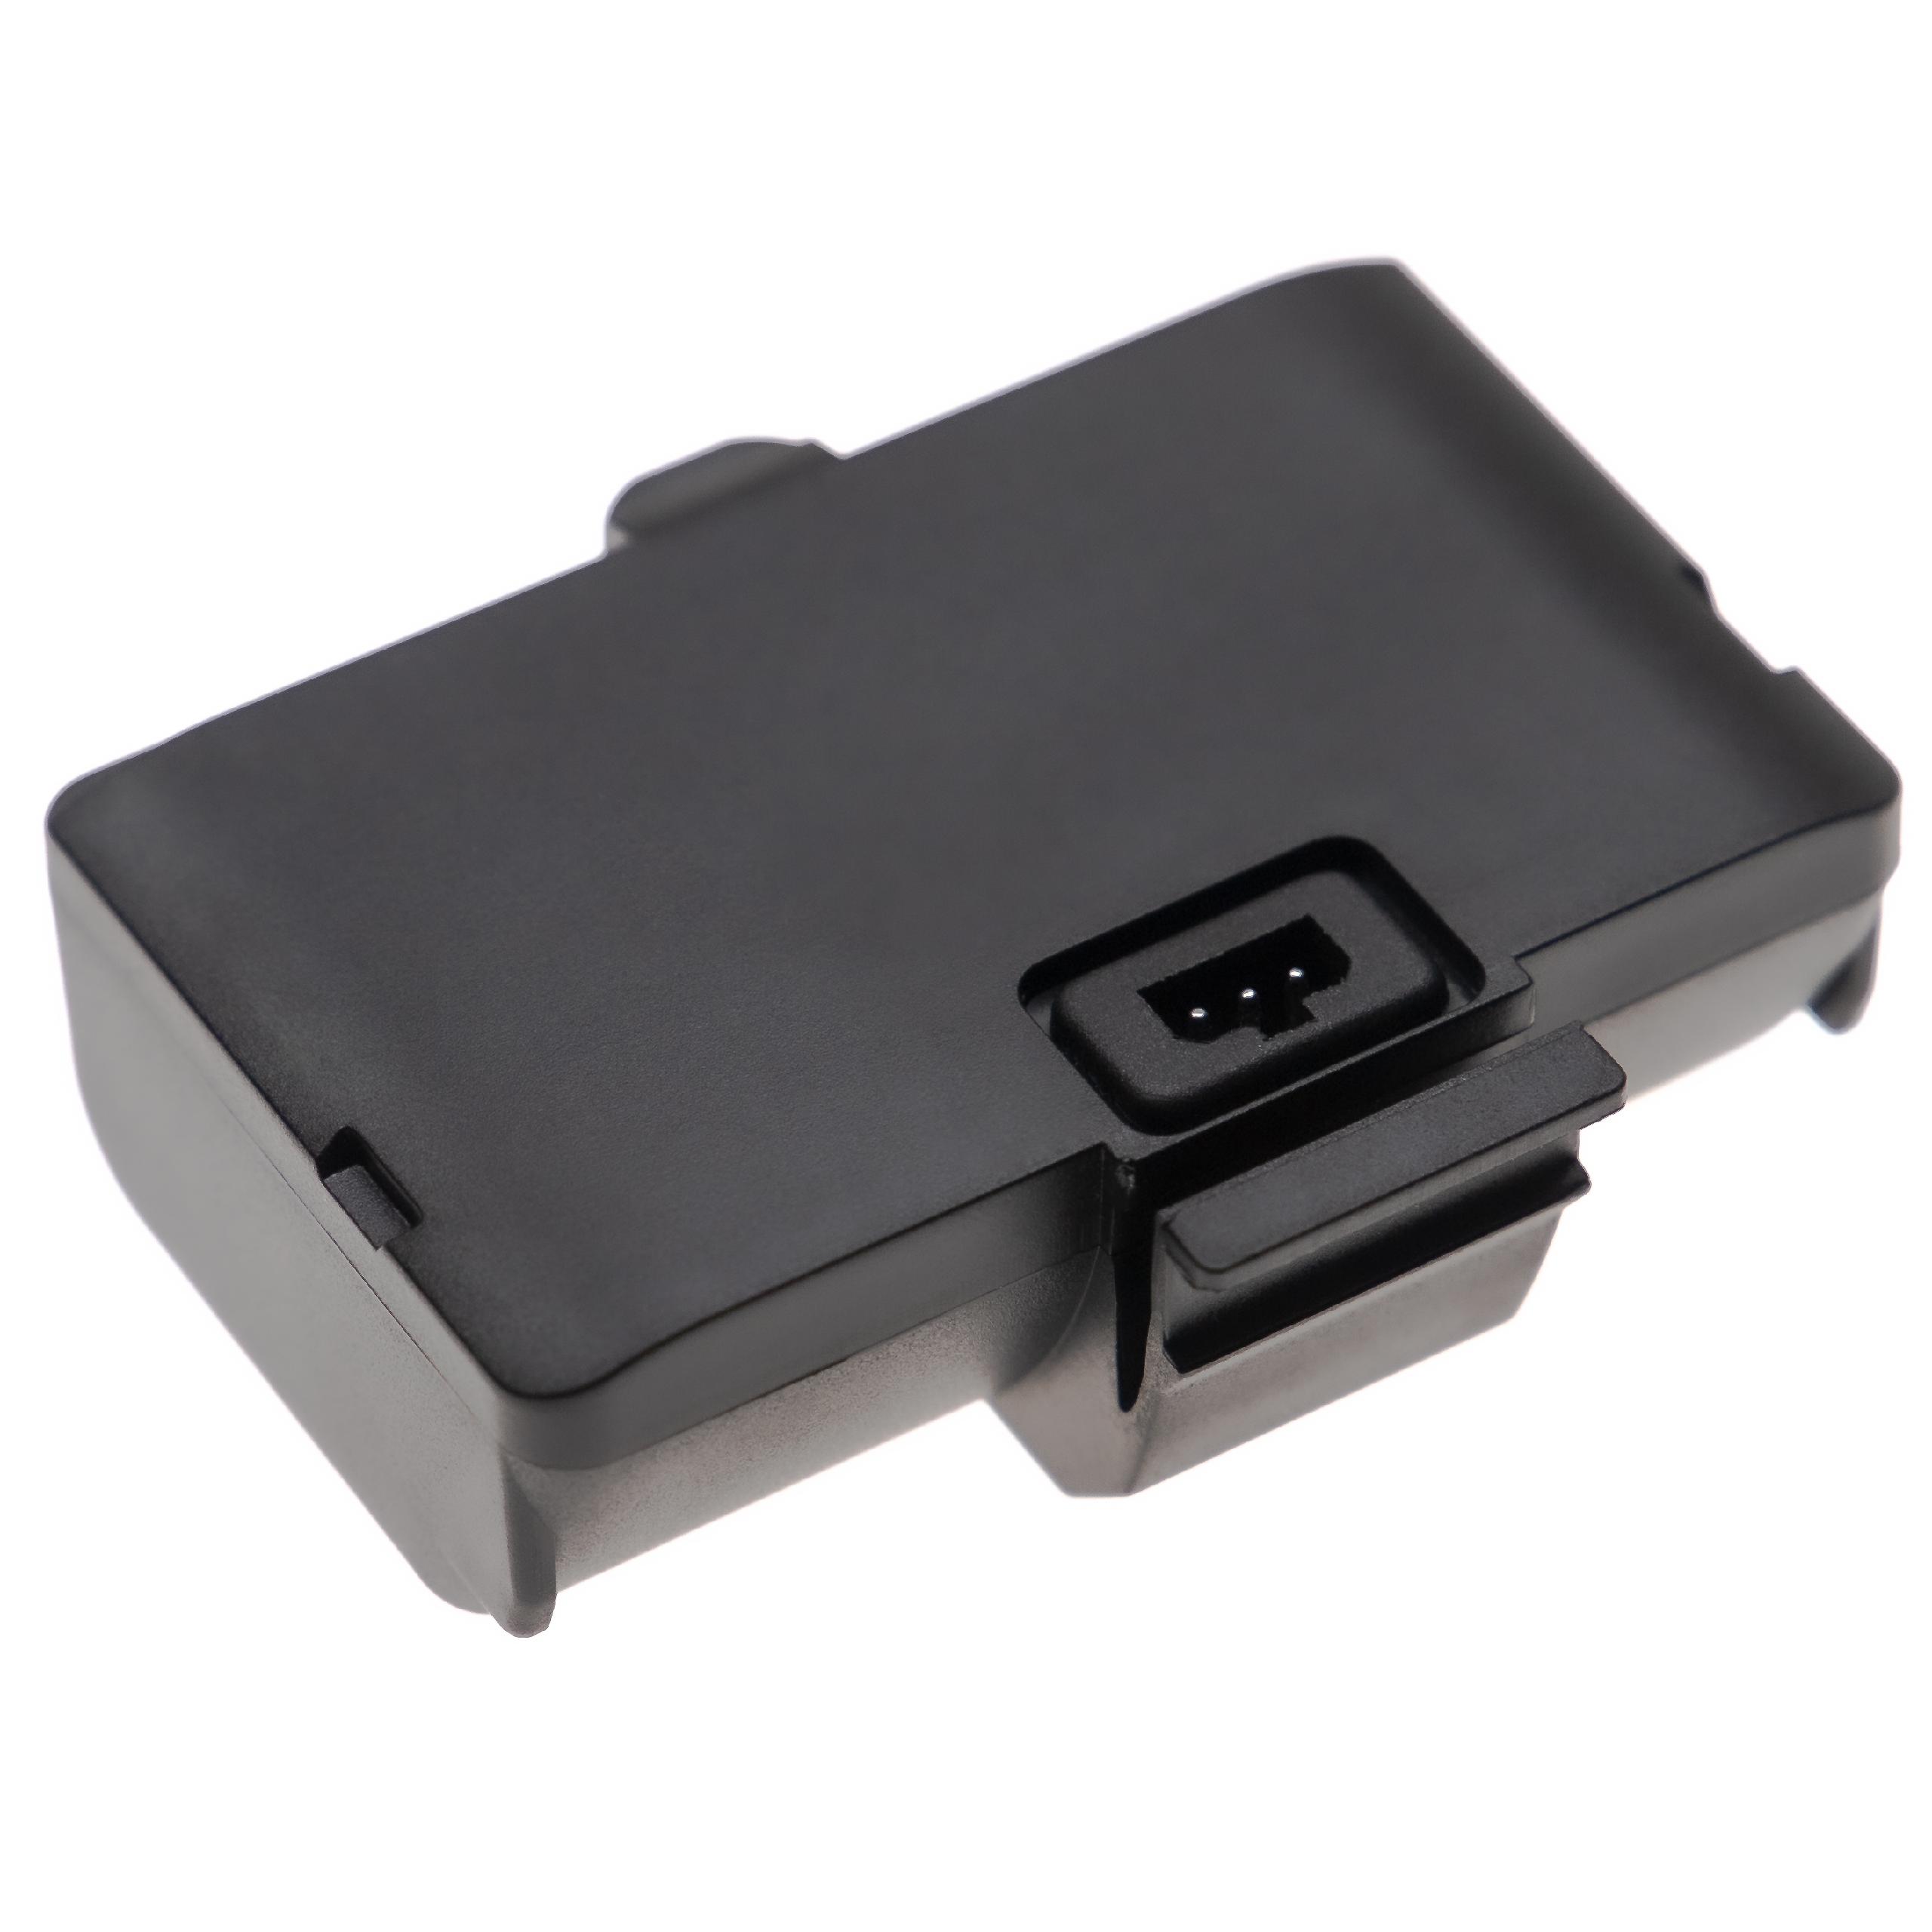 Akumulator do drukarki / drukarki etykiet zamiennik Zebra AK18026-002, CT17497-1 - 2600 mAh 7,4 V Li-Ion